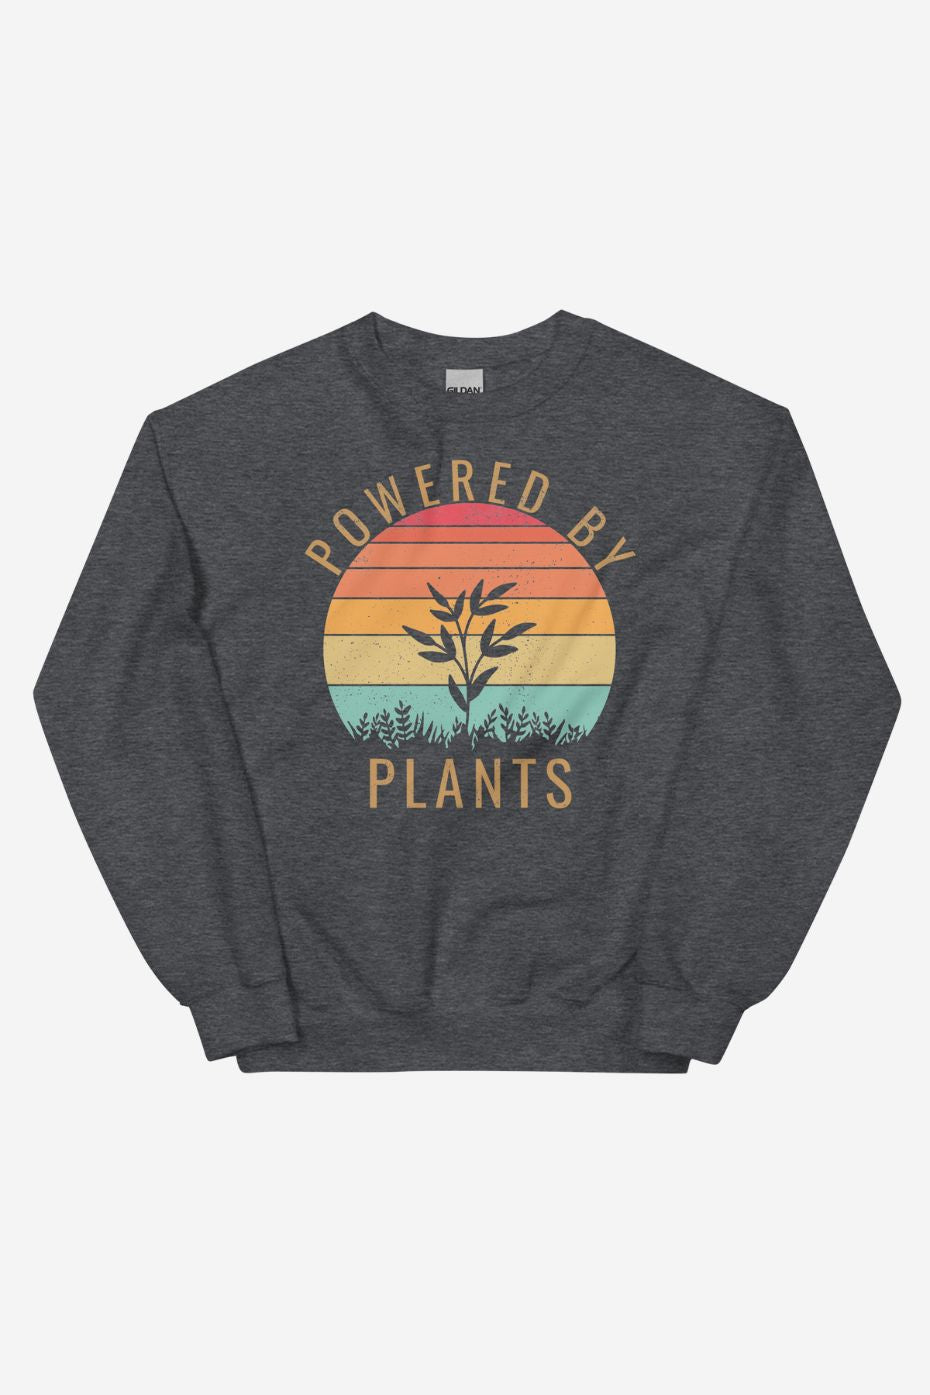 Powered By Plants - Unisex Sweatshirt